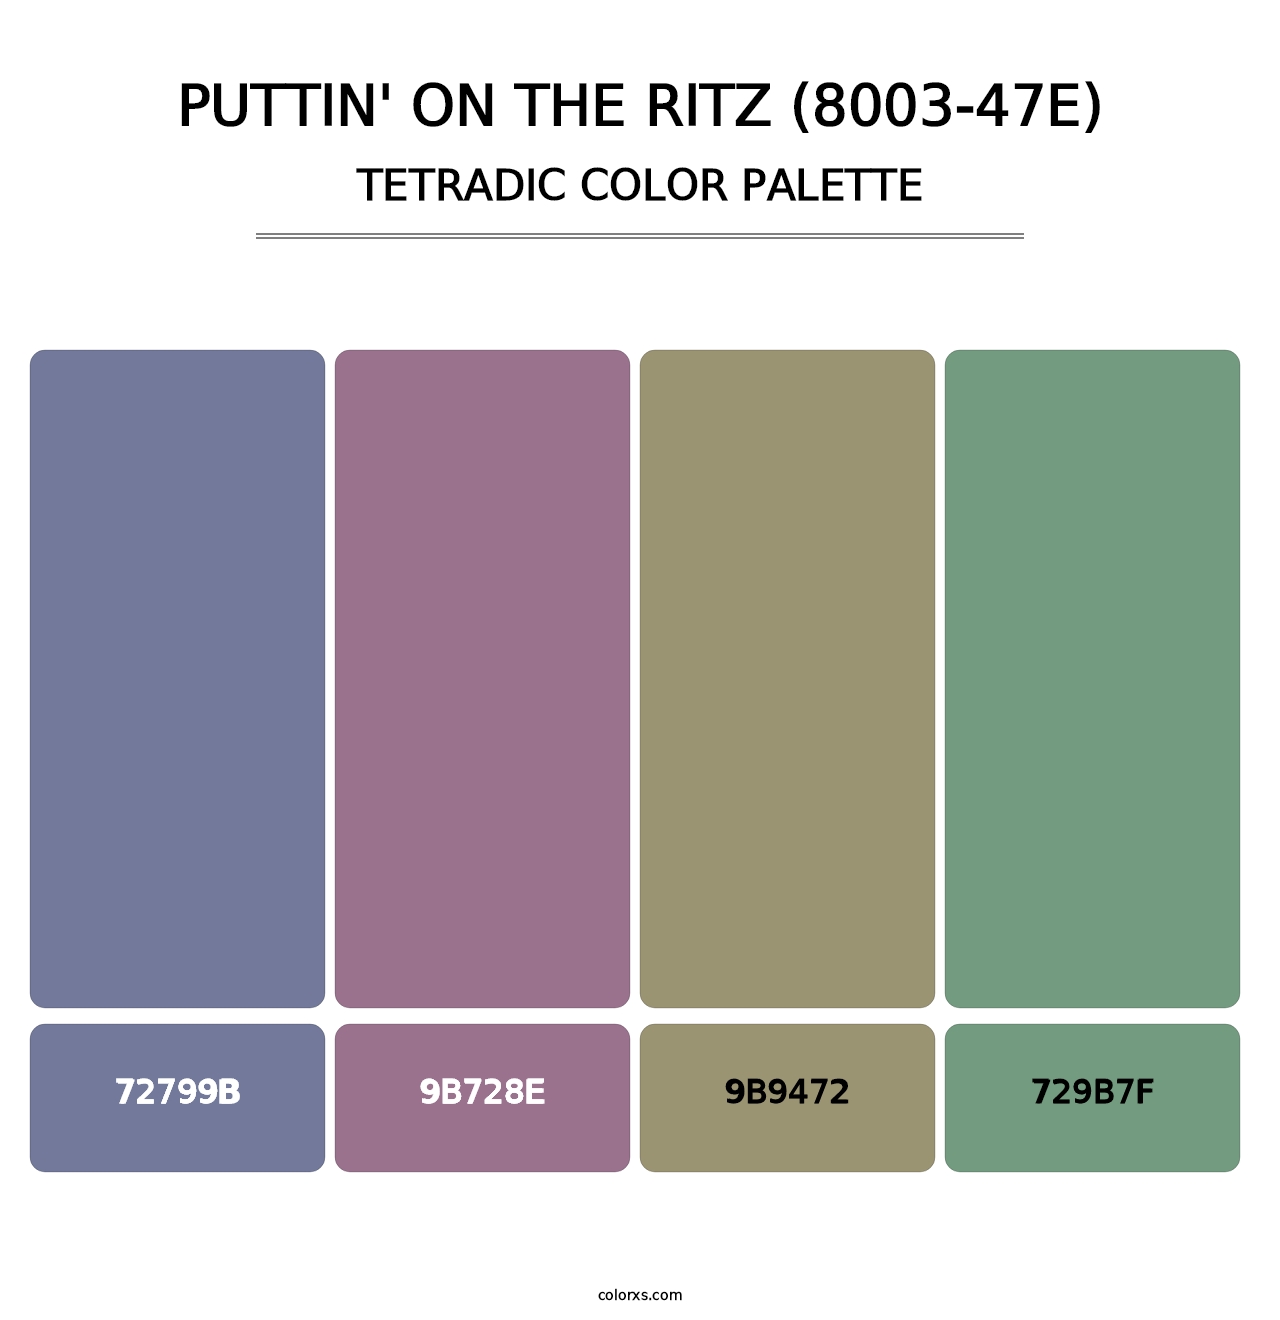 Puttin' on the Ritz (8003-47E) - Tetradic Color Palette